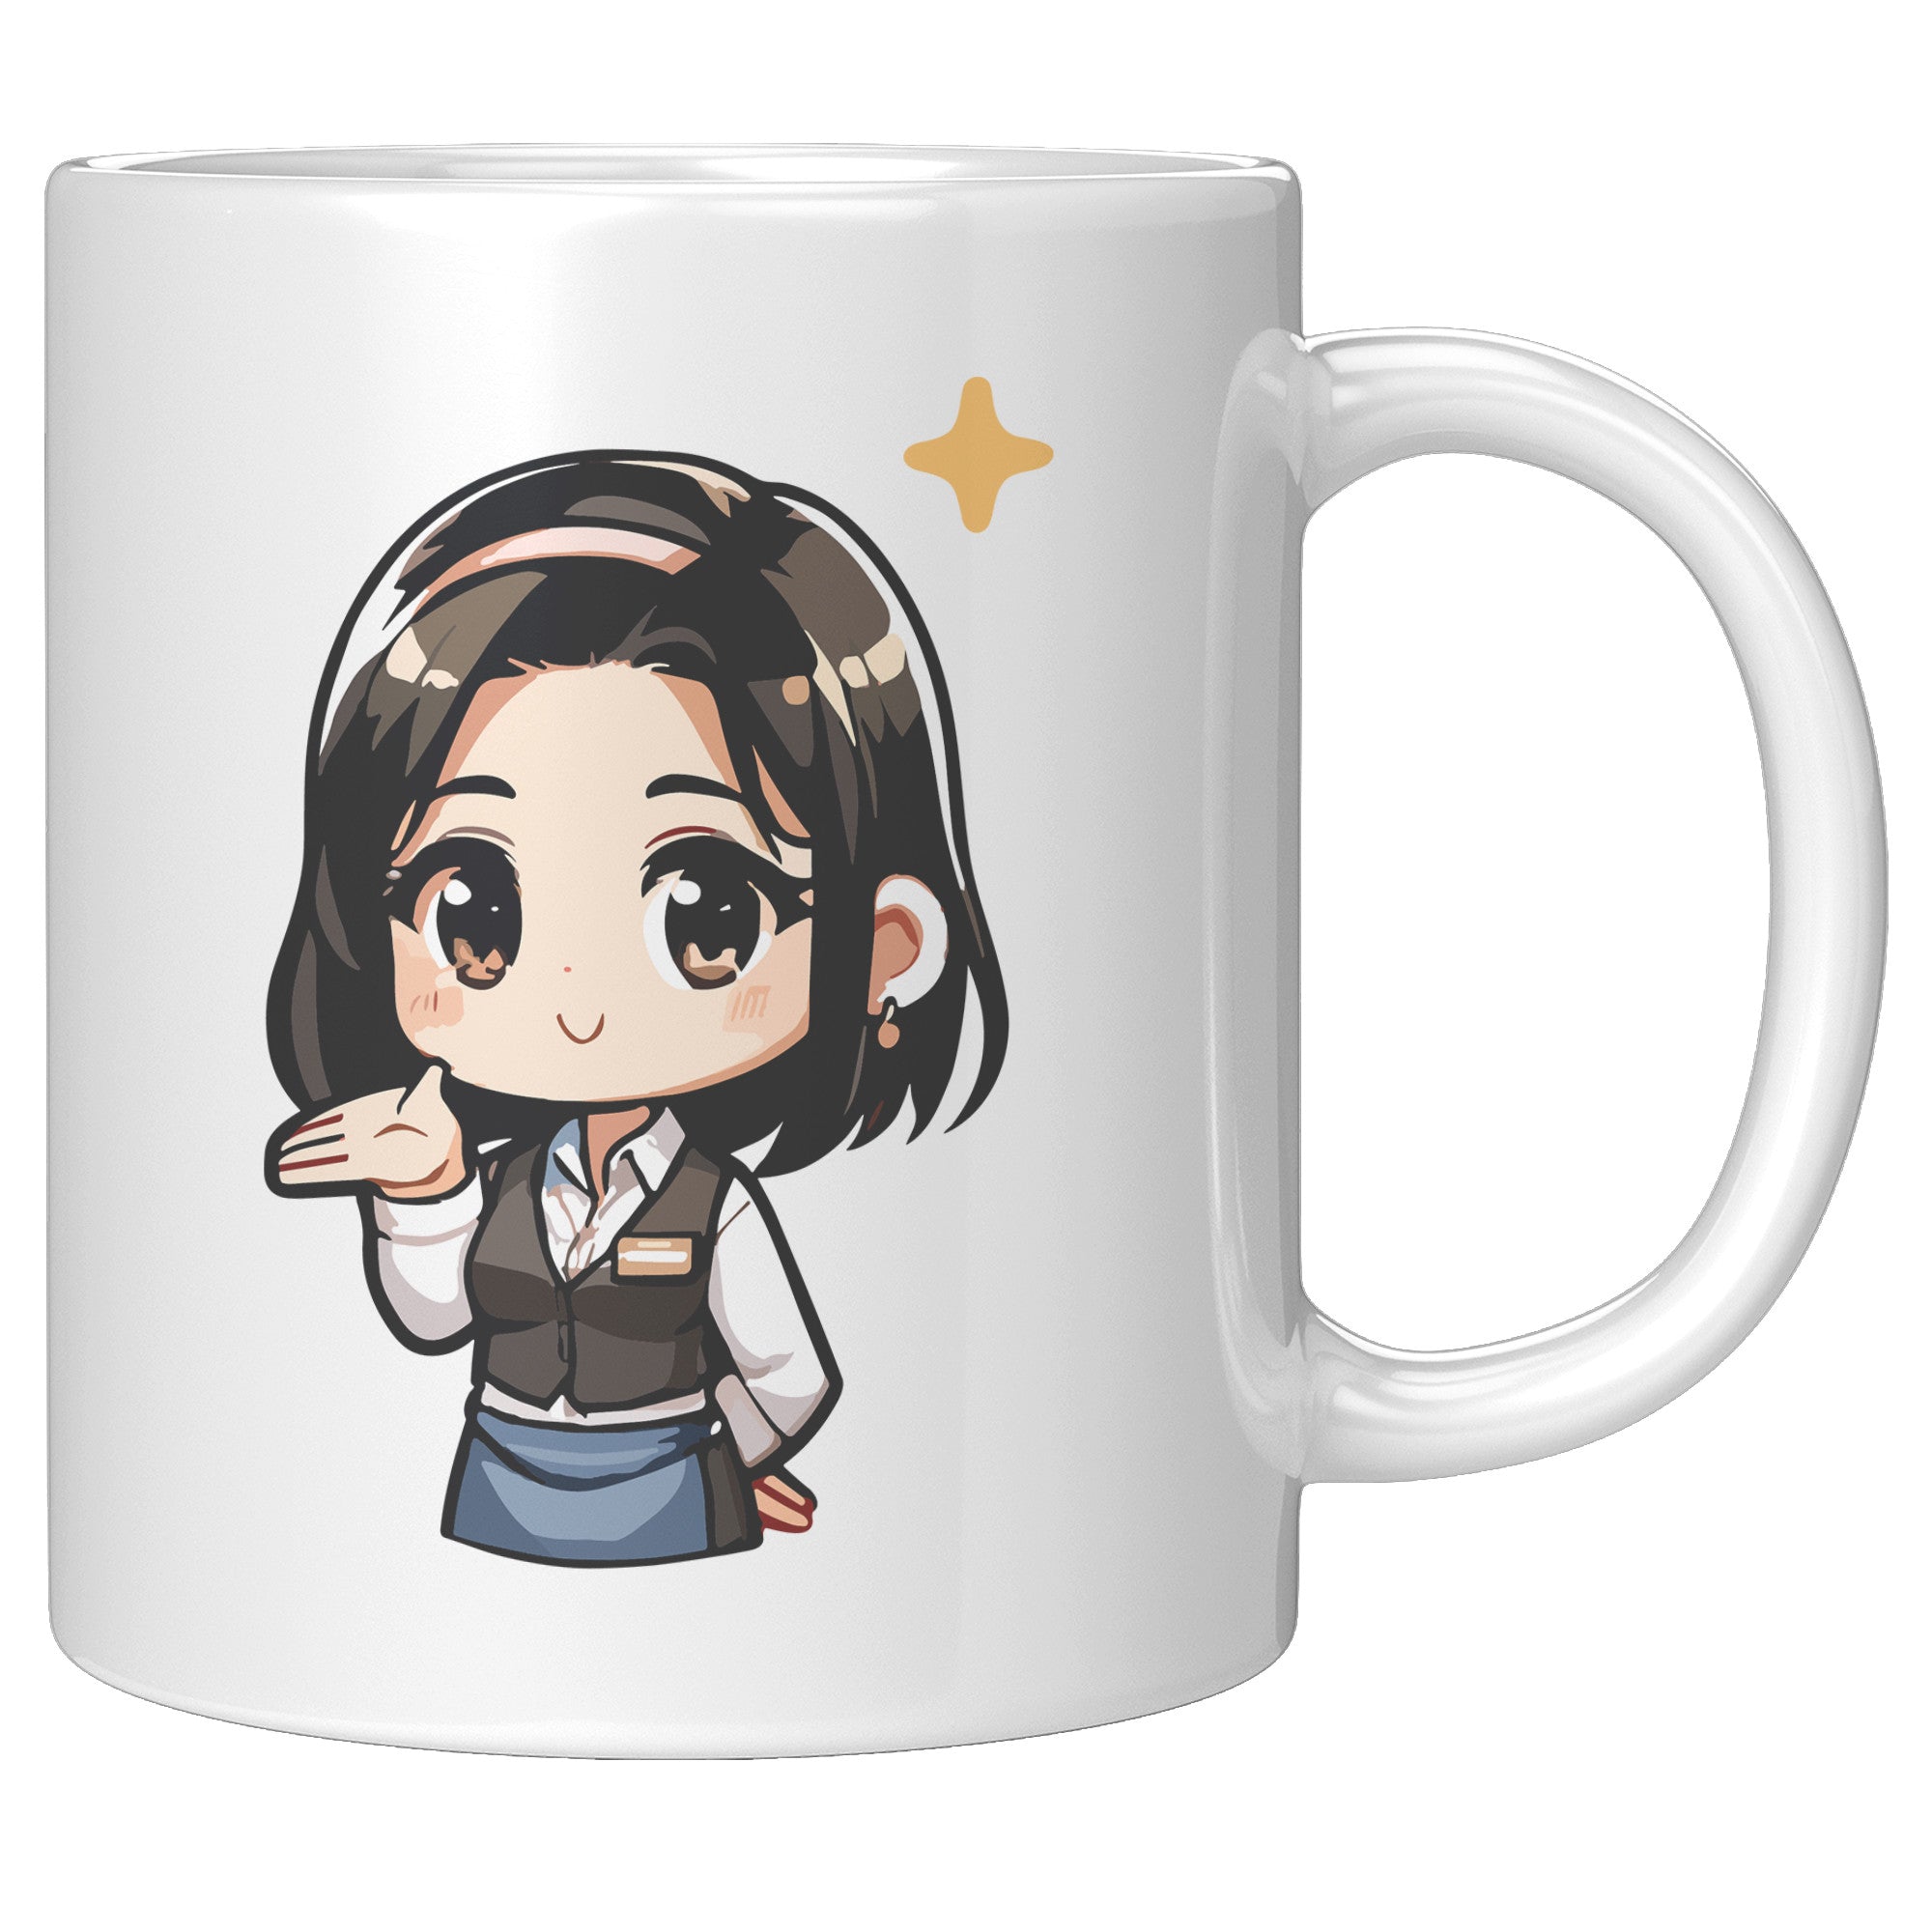 "Marites Gossip Queen Coffee Mug - Cute Cartoon 'Ano Ang Latest?' Cup - Perfect Chismosa Gift - Filipino Slang Tea Mug" - F